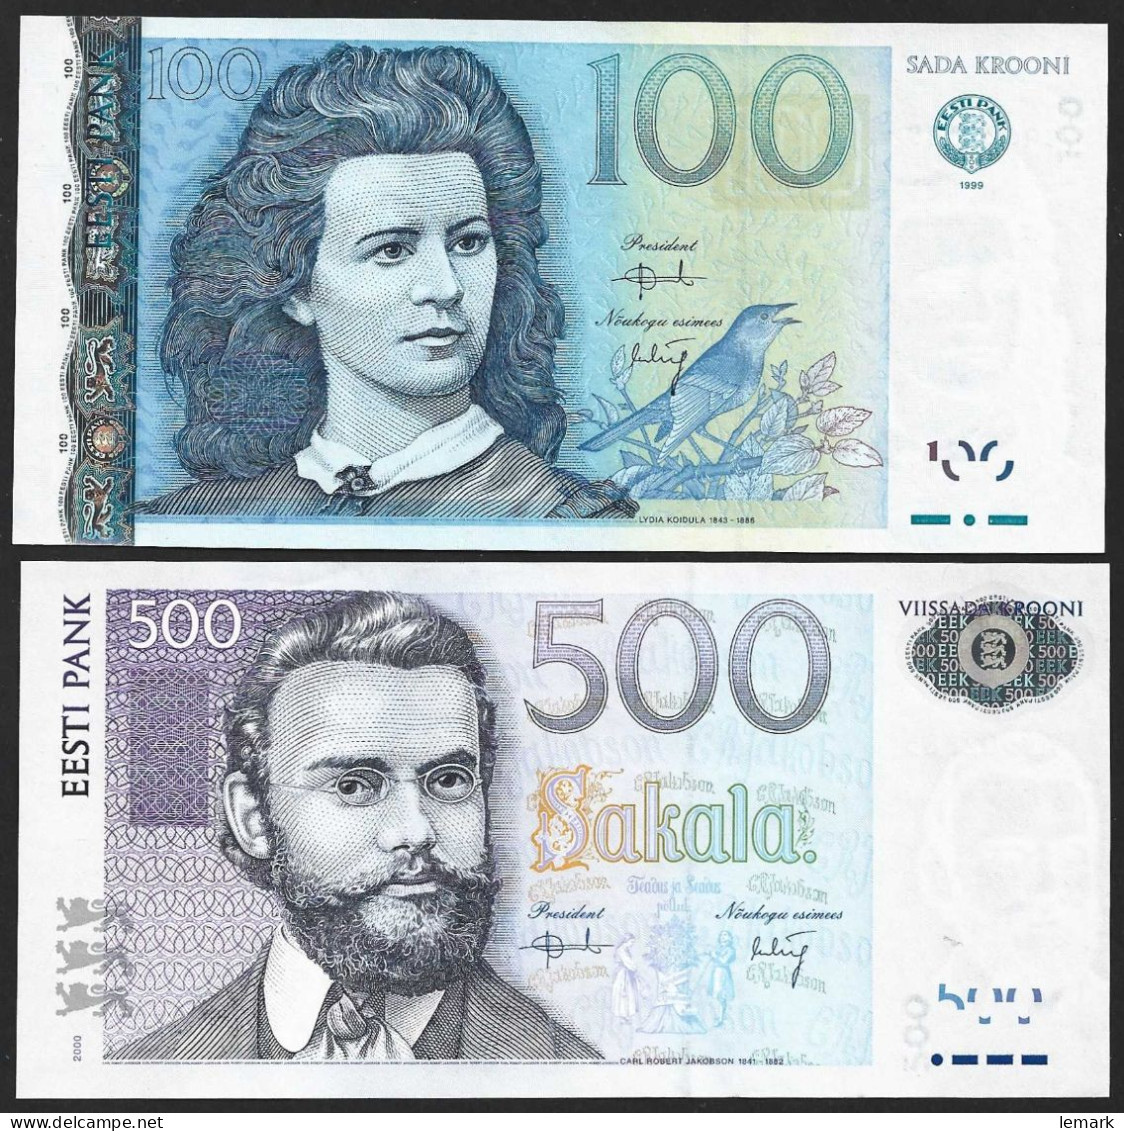 Estonia set 8 pcs 1-500 krooni UNC